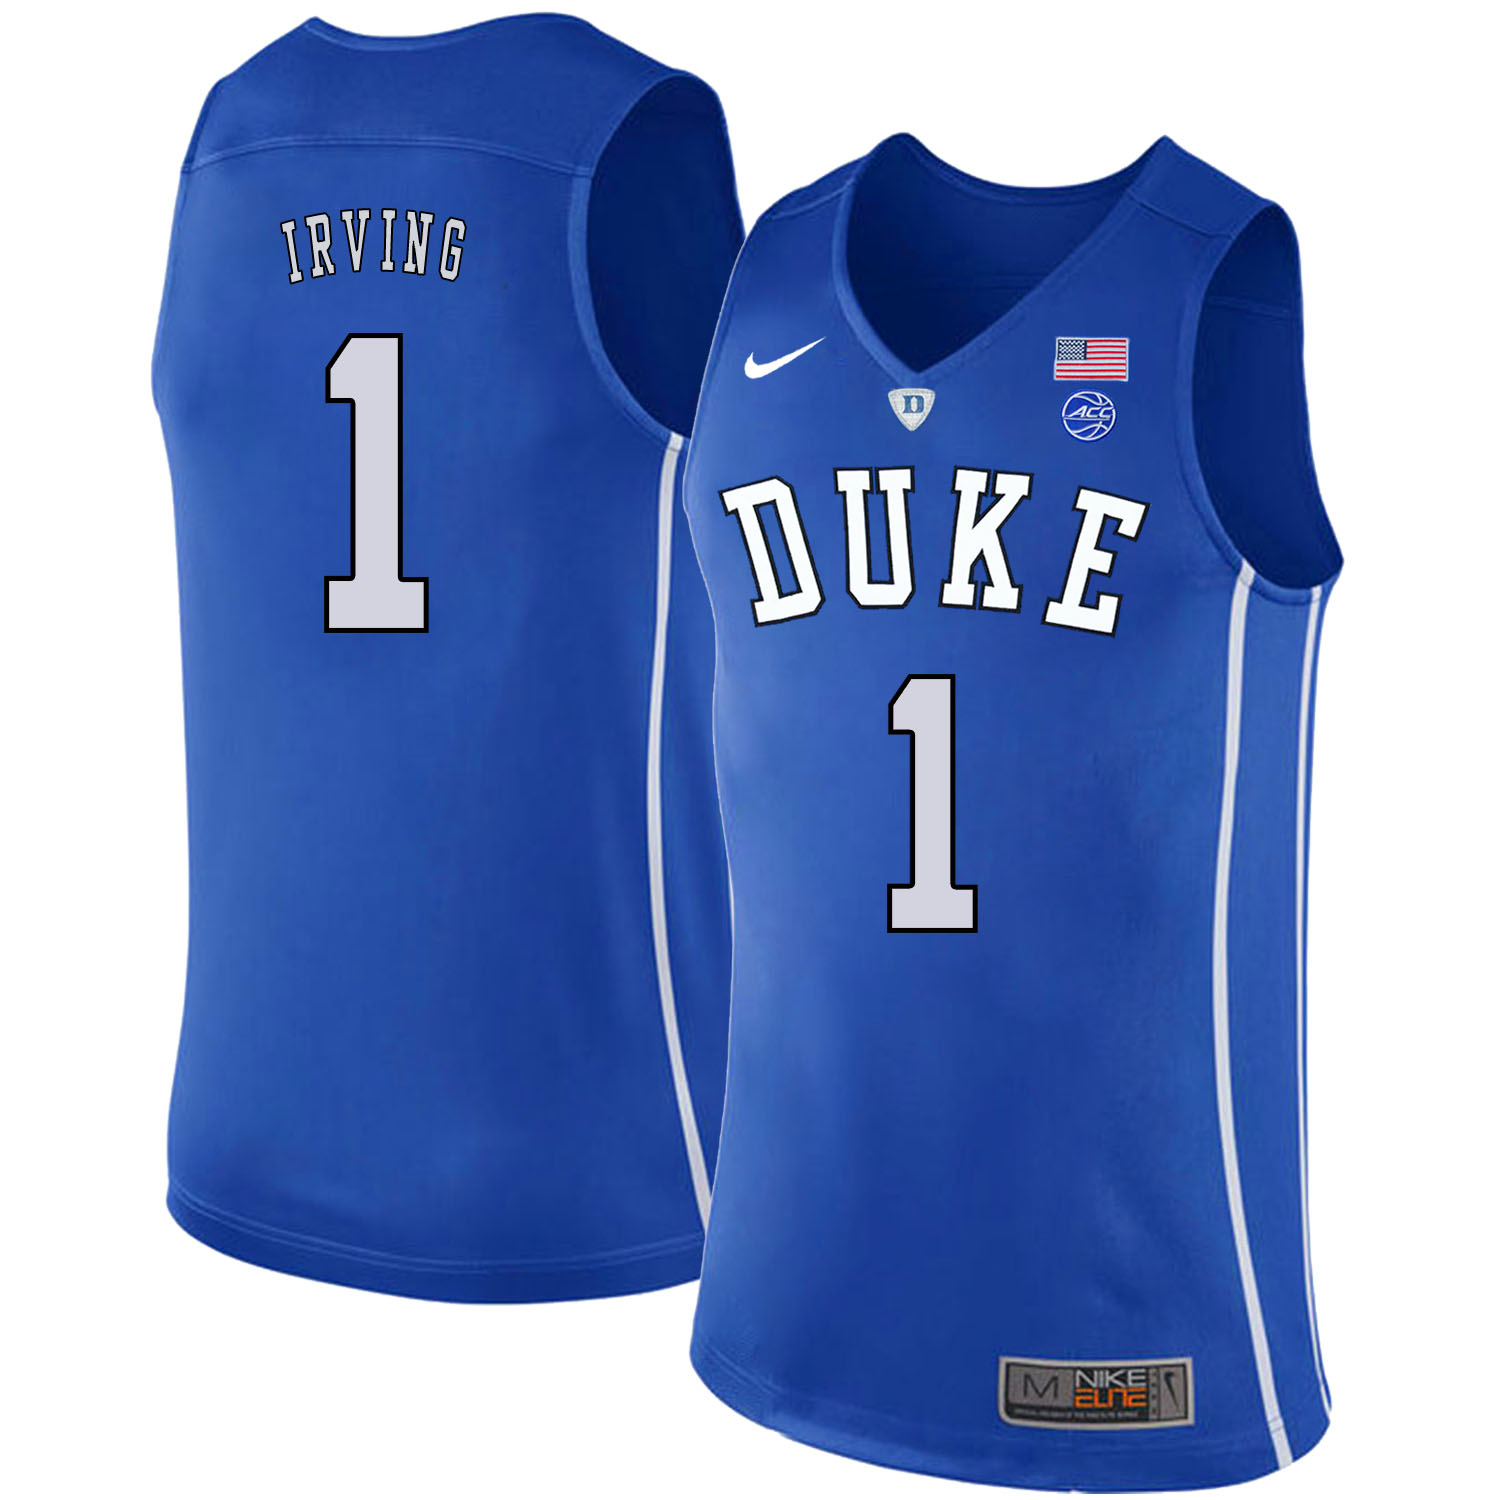 Duke Blue Devils 1 Kyrie Irving Blue Nike College Basketabll Jersey